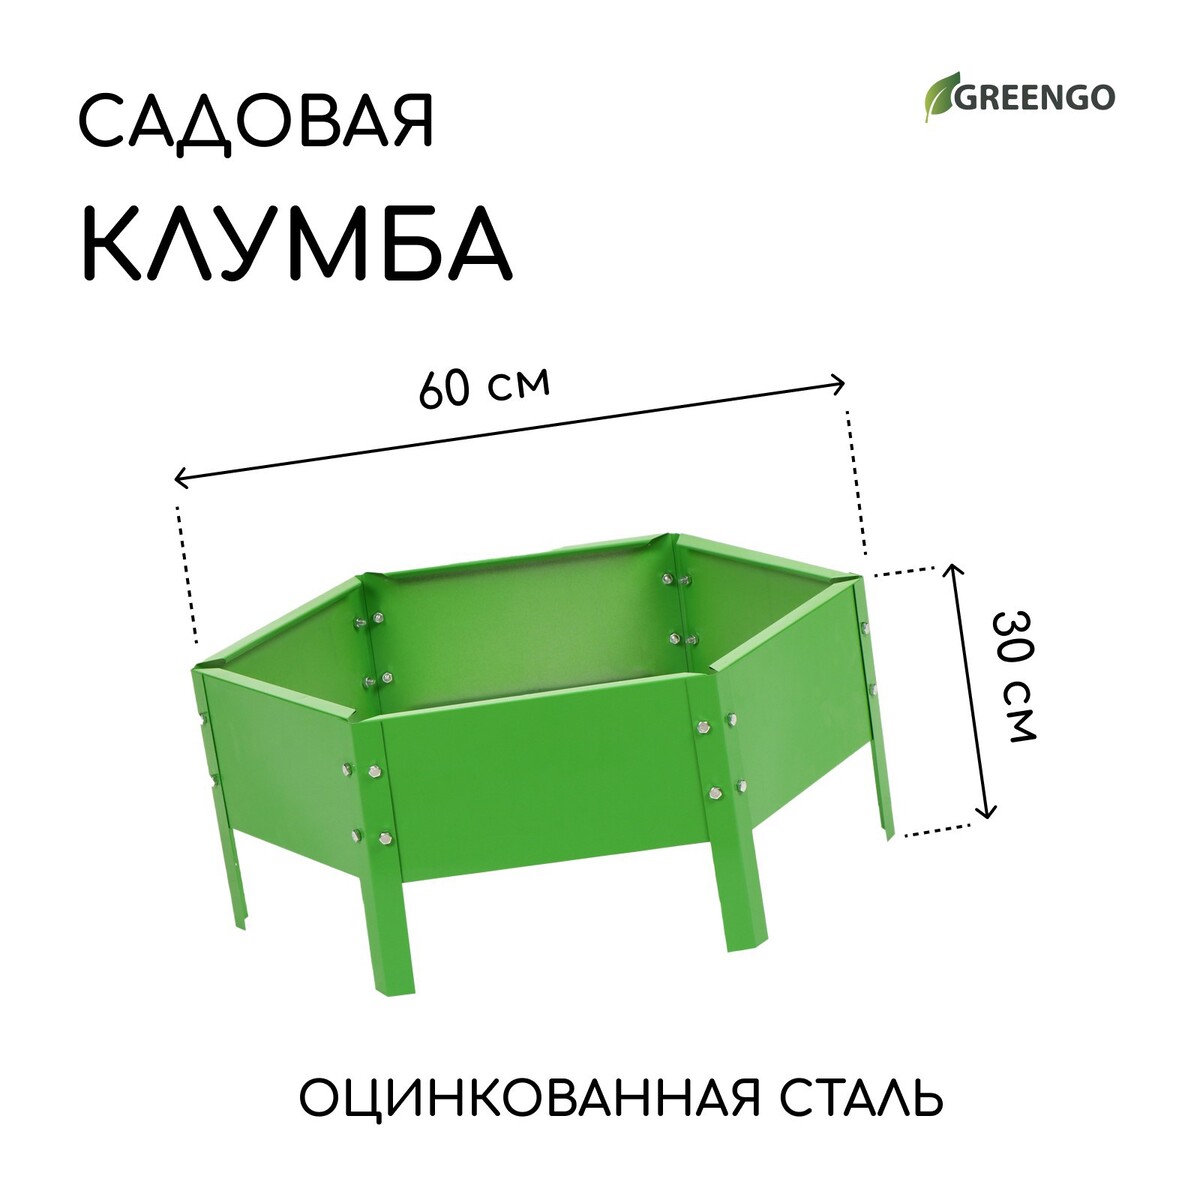 Клумба оцинкованная, d = 60 см, h = 15 см, ярко-зеленая, greengo клумба оцинкованная d 80 см h 15 см ярко зеленая greengo